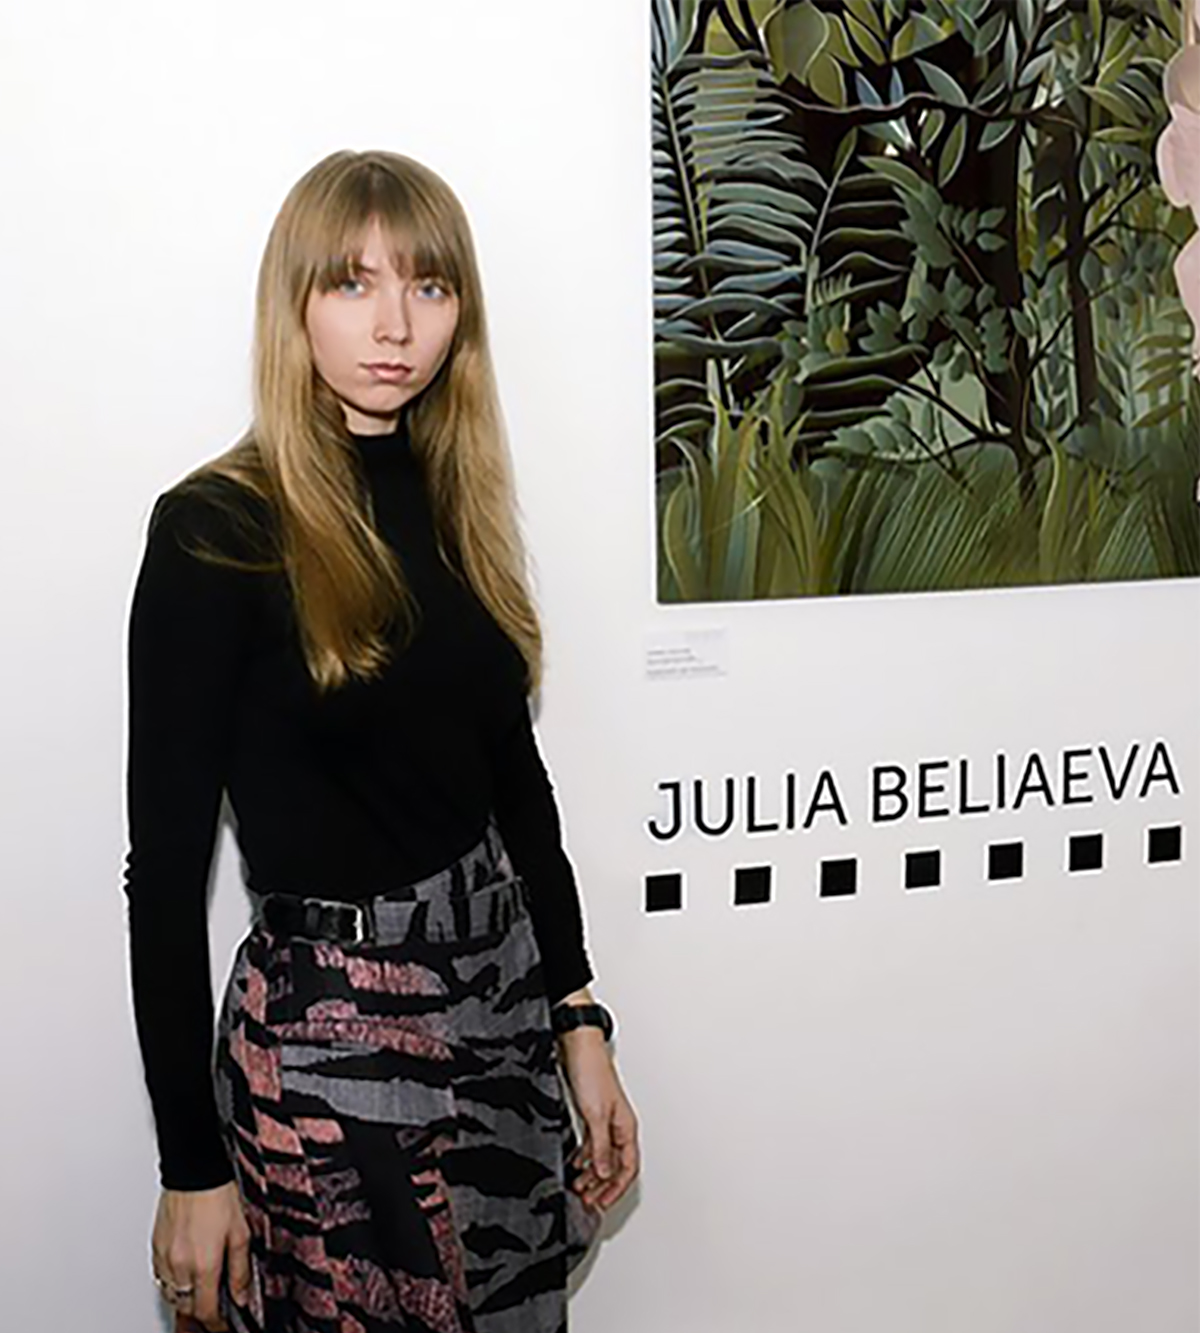 Beliaeva Julia, artist, sculptor